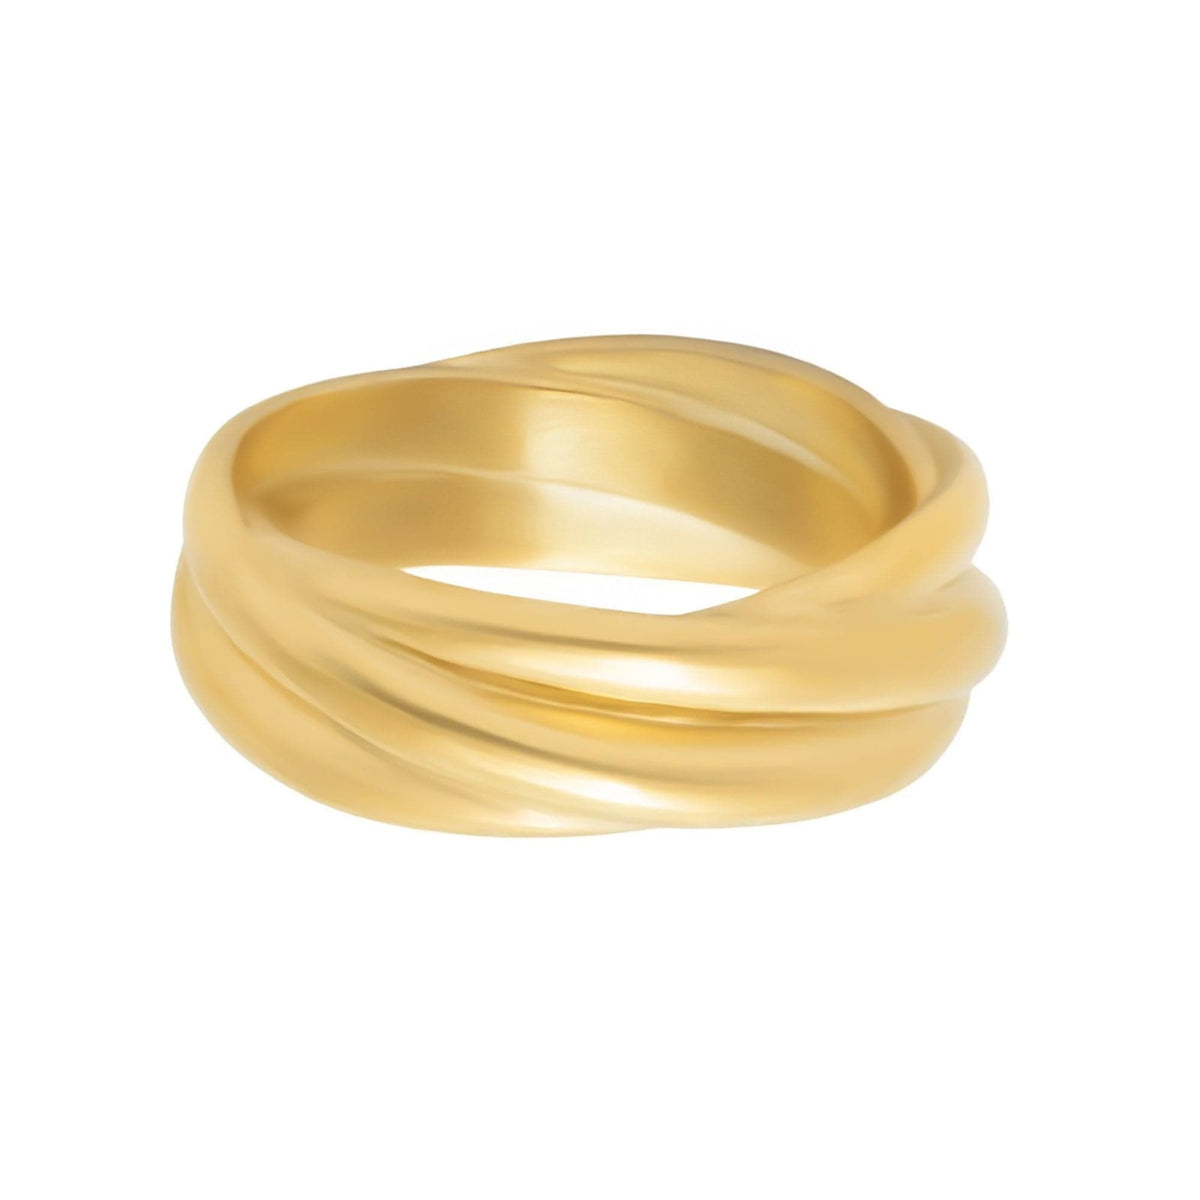 BohoMoon Stainless Steel Donatella Ring Gold / US 5 / UK J / EUR 49 (x small)